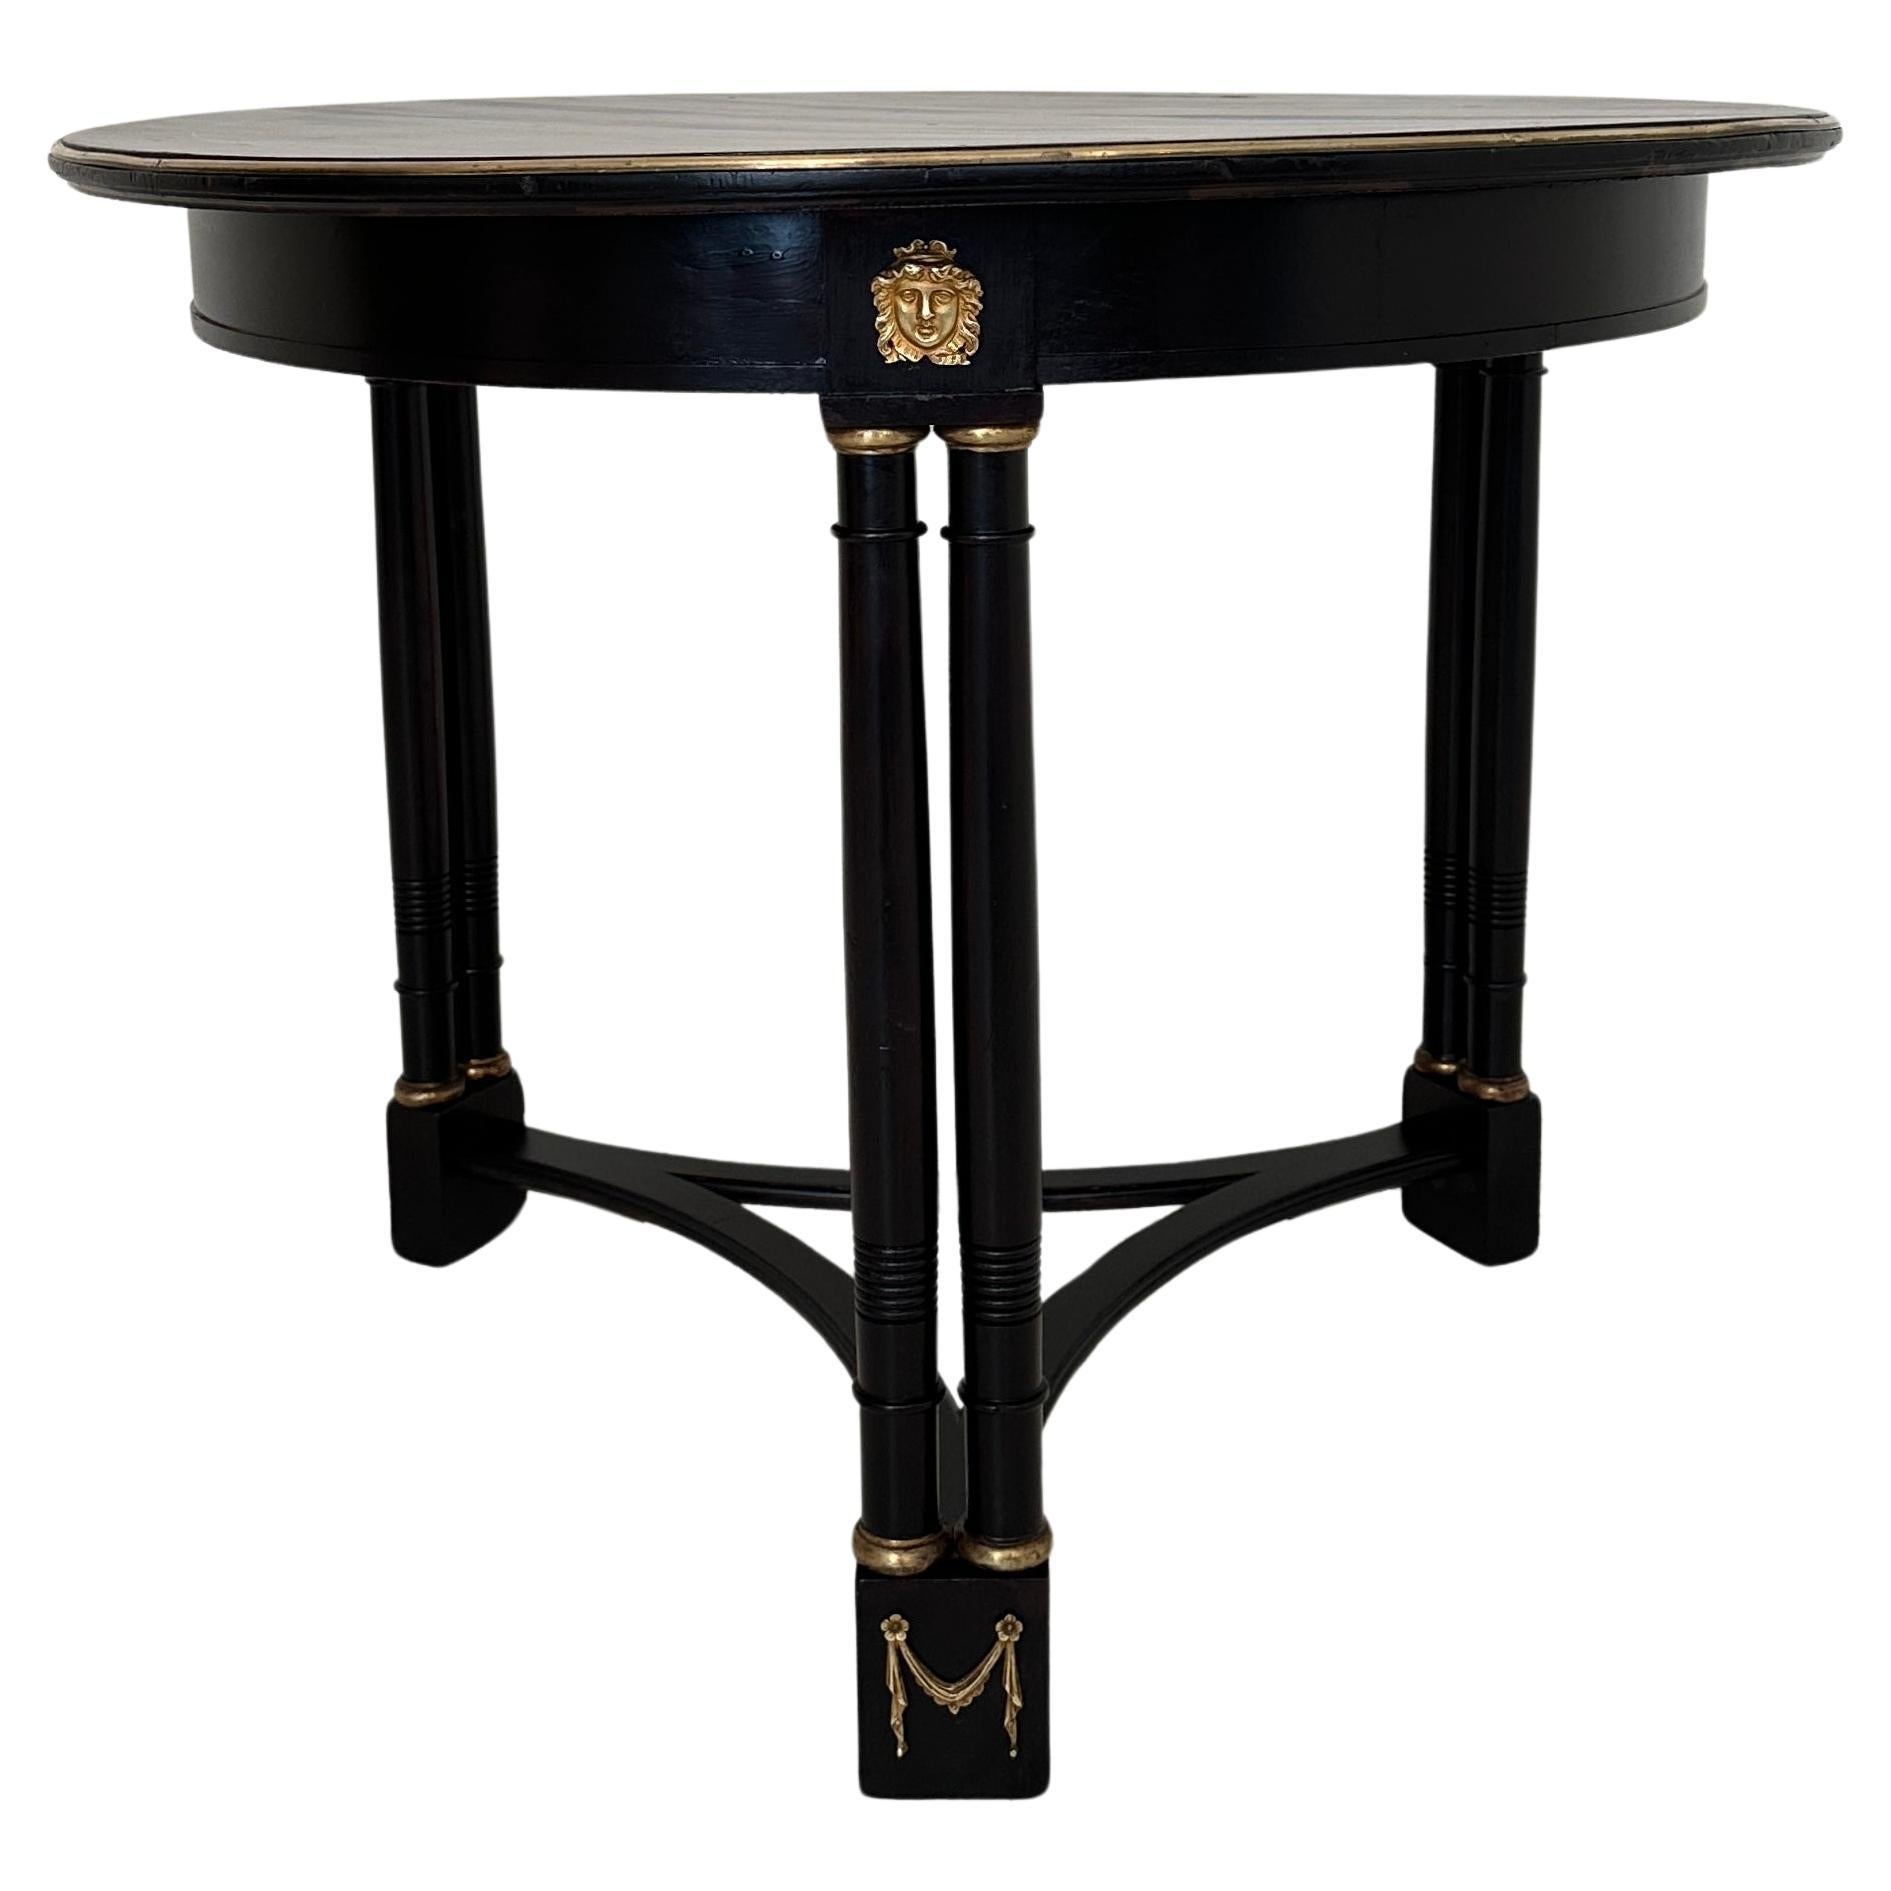 19th Century Black Round Gueridon Empire Style Table, around 1870